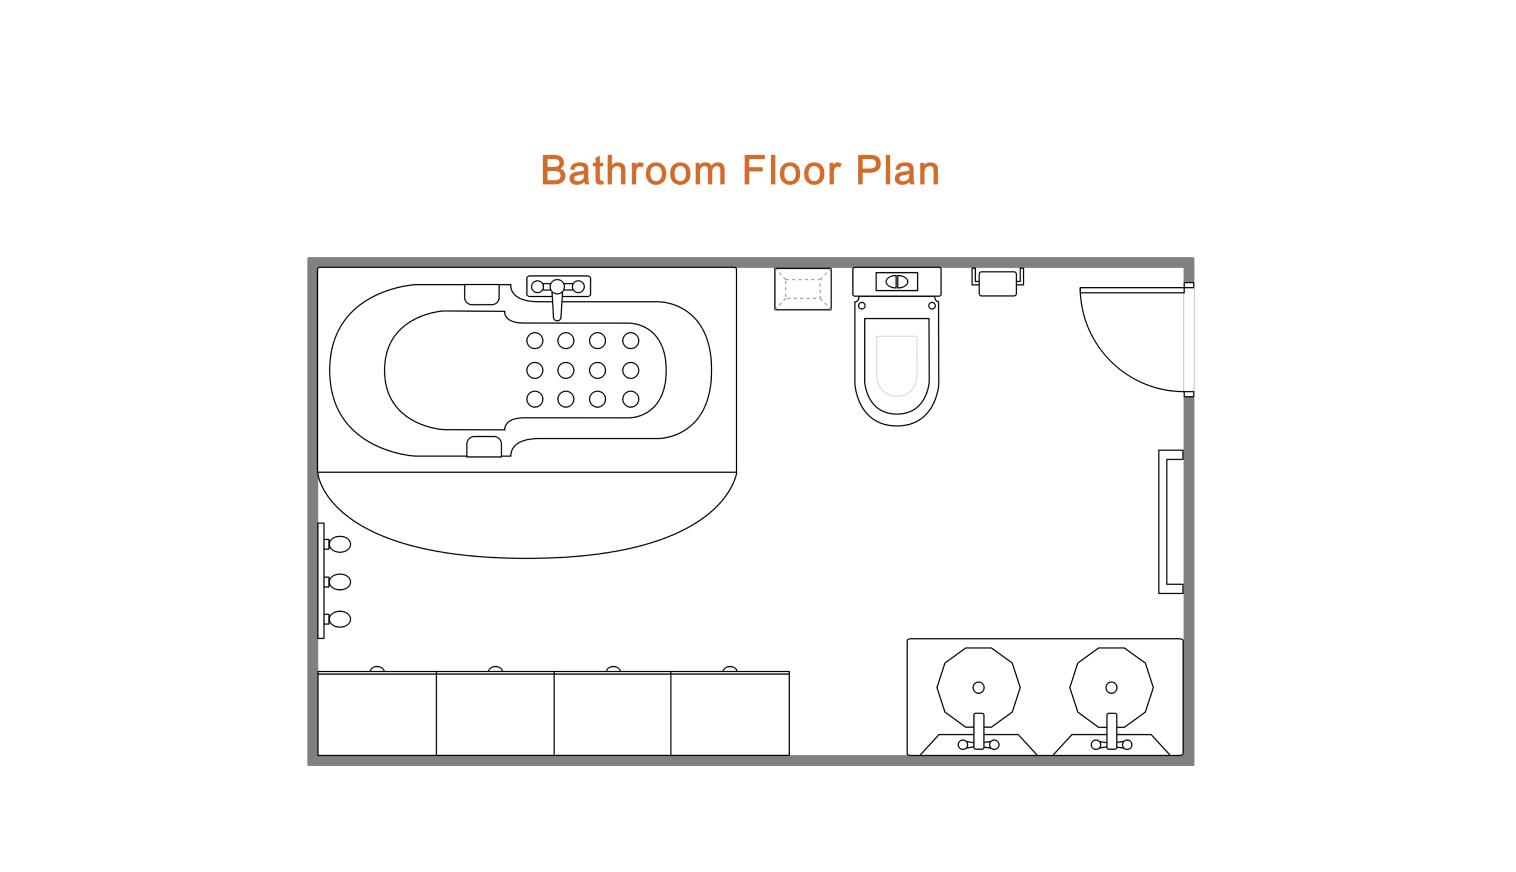 Floor Plan for bathroom